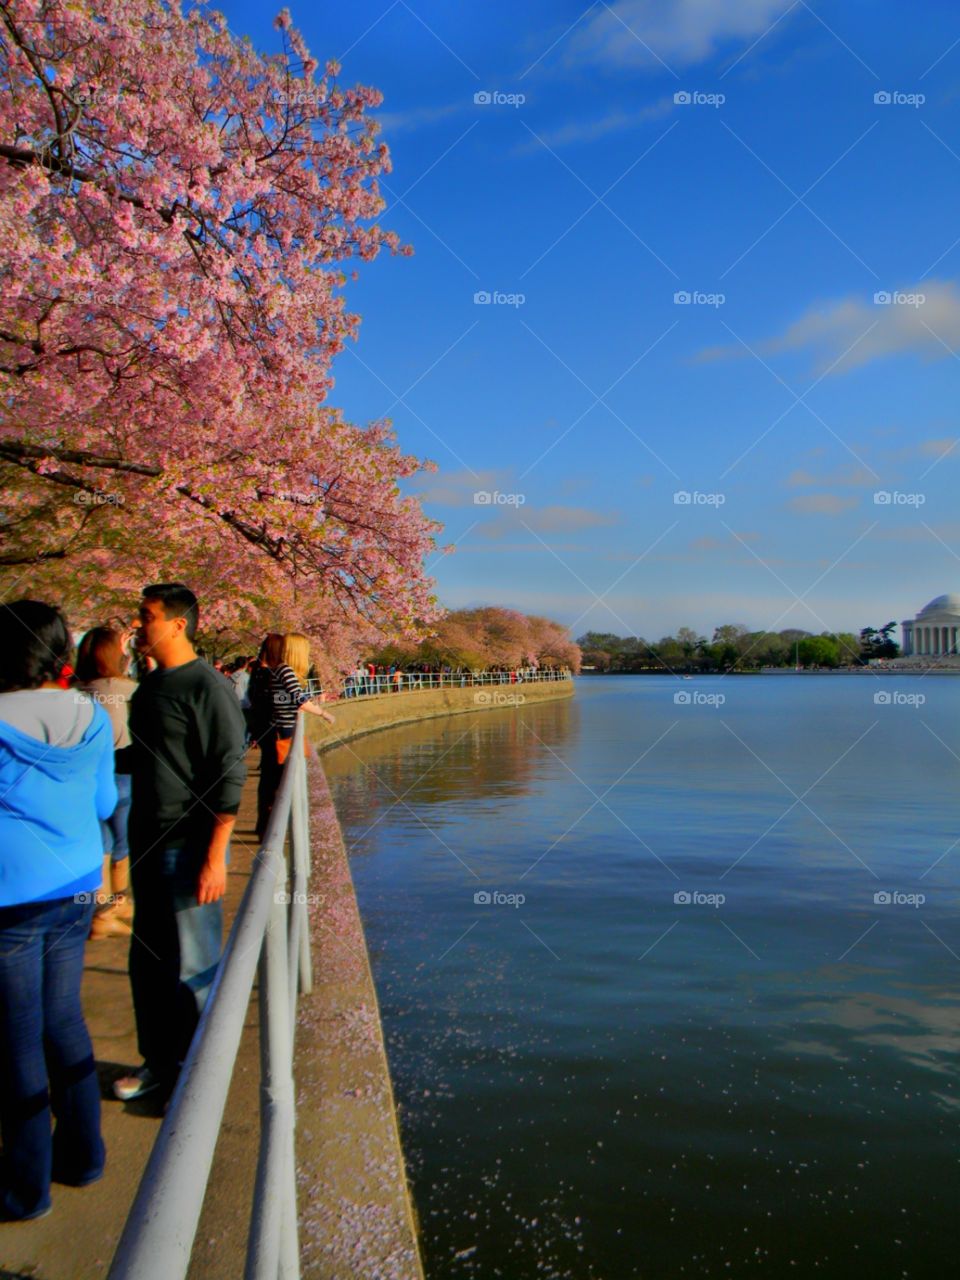 cherry blossoms . Springtime in Washington DC 